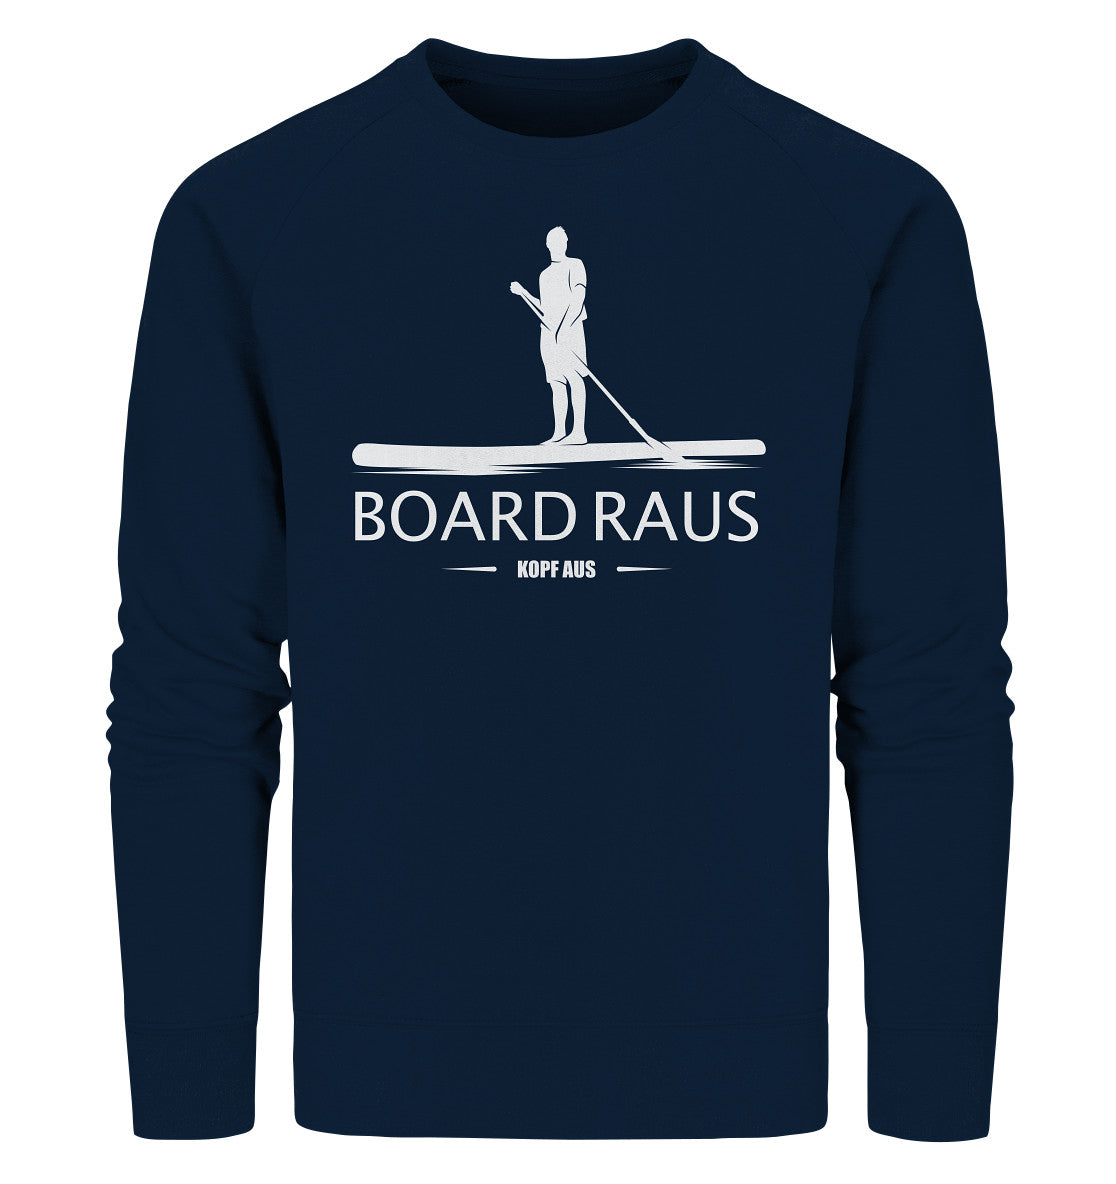 Board raus - Kopf aus! - Organic Sweatshirt